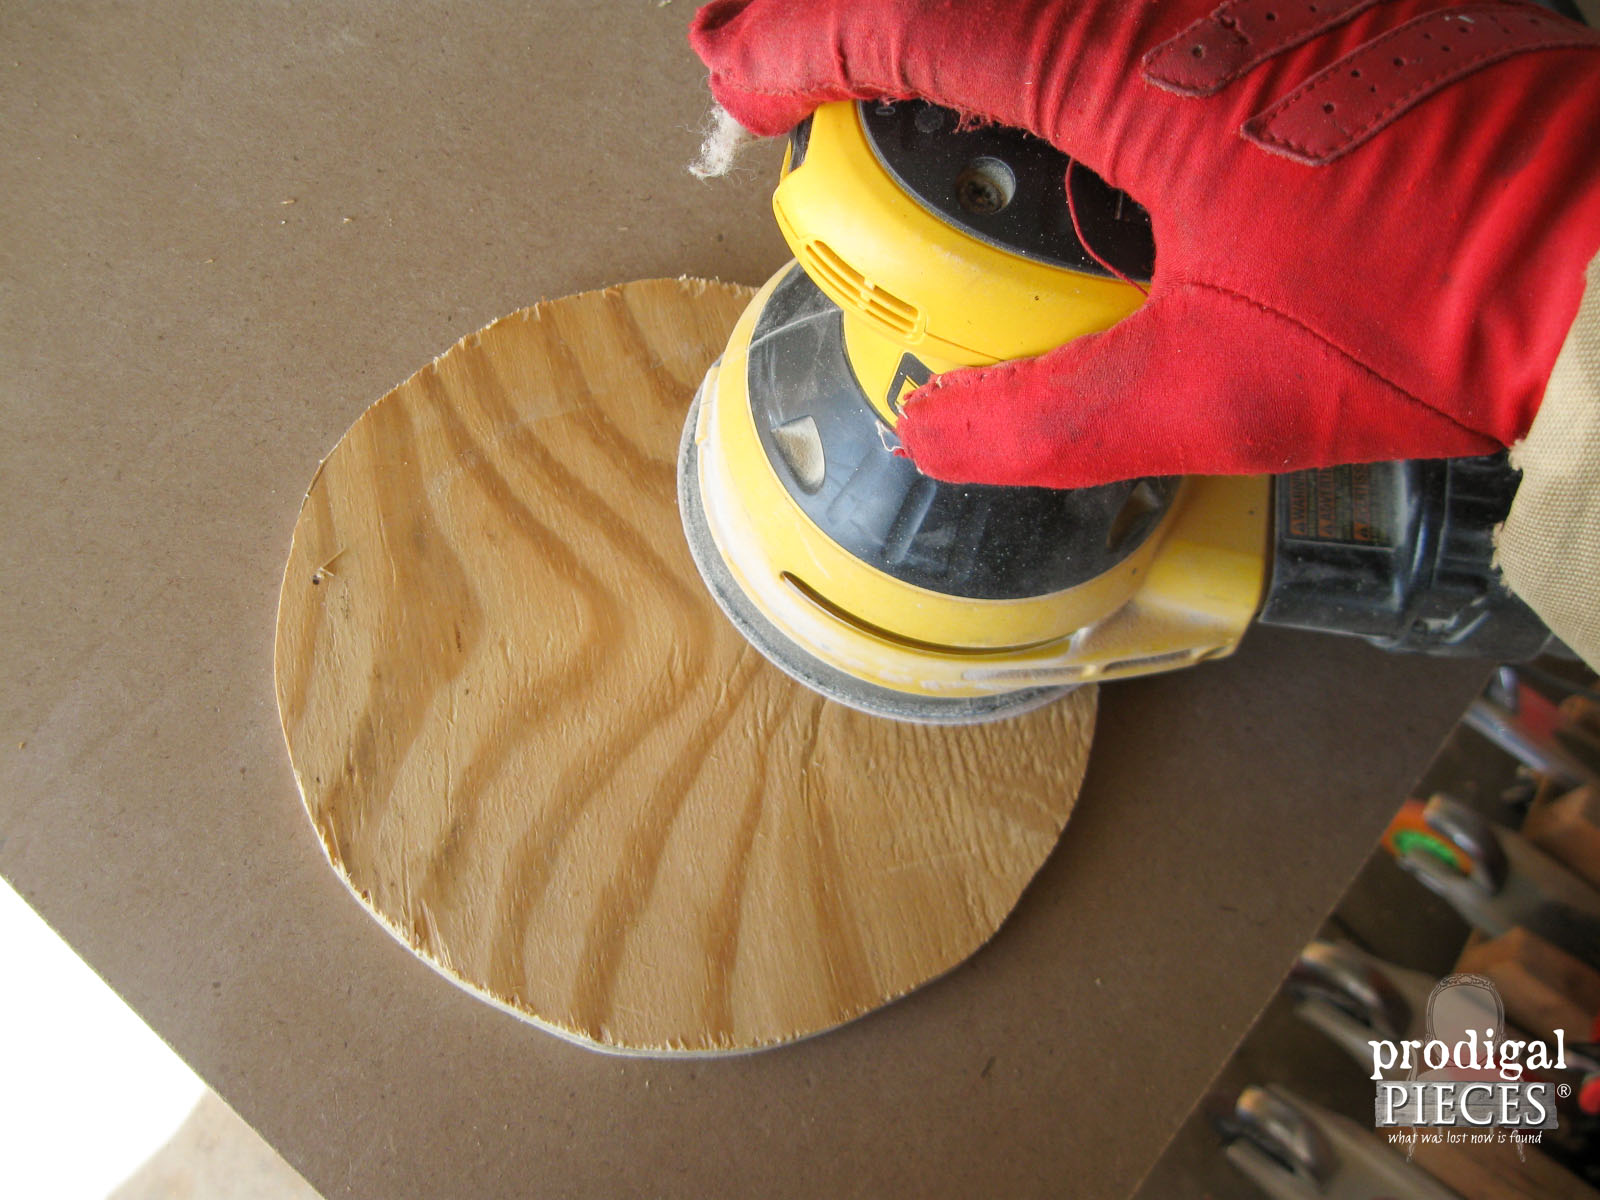 Sanding Plywood Wood Rounds | Prodigal Pieces | www.prodigalpieces.com